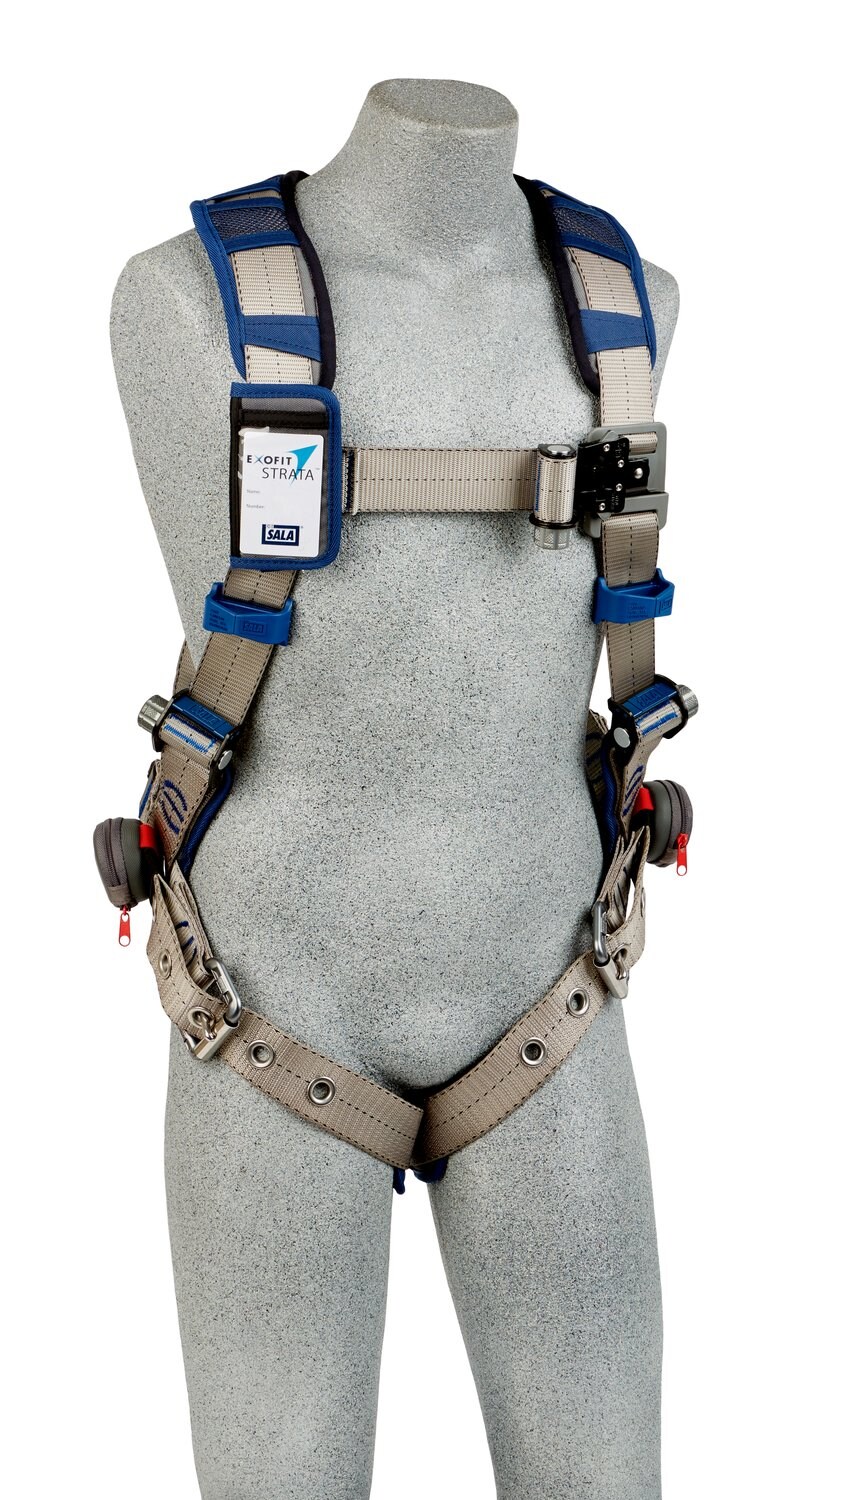 7012815977 - 3M DBI-SALA ExoFit STRATA Comfort Vest Safety Harness 1112518, X-Large